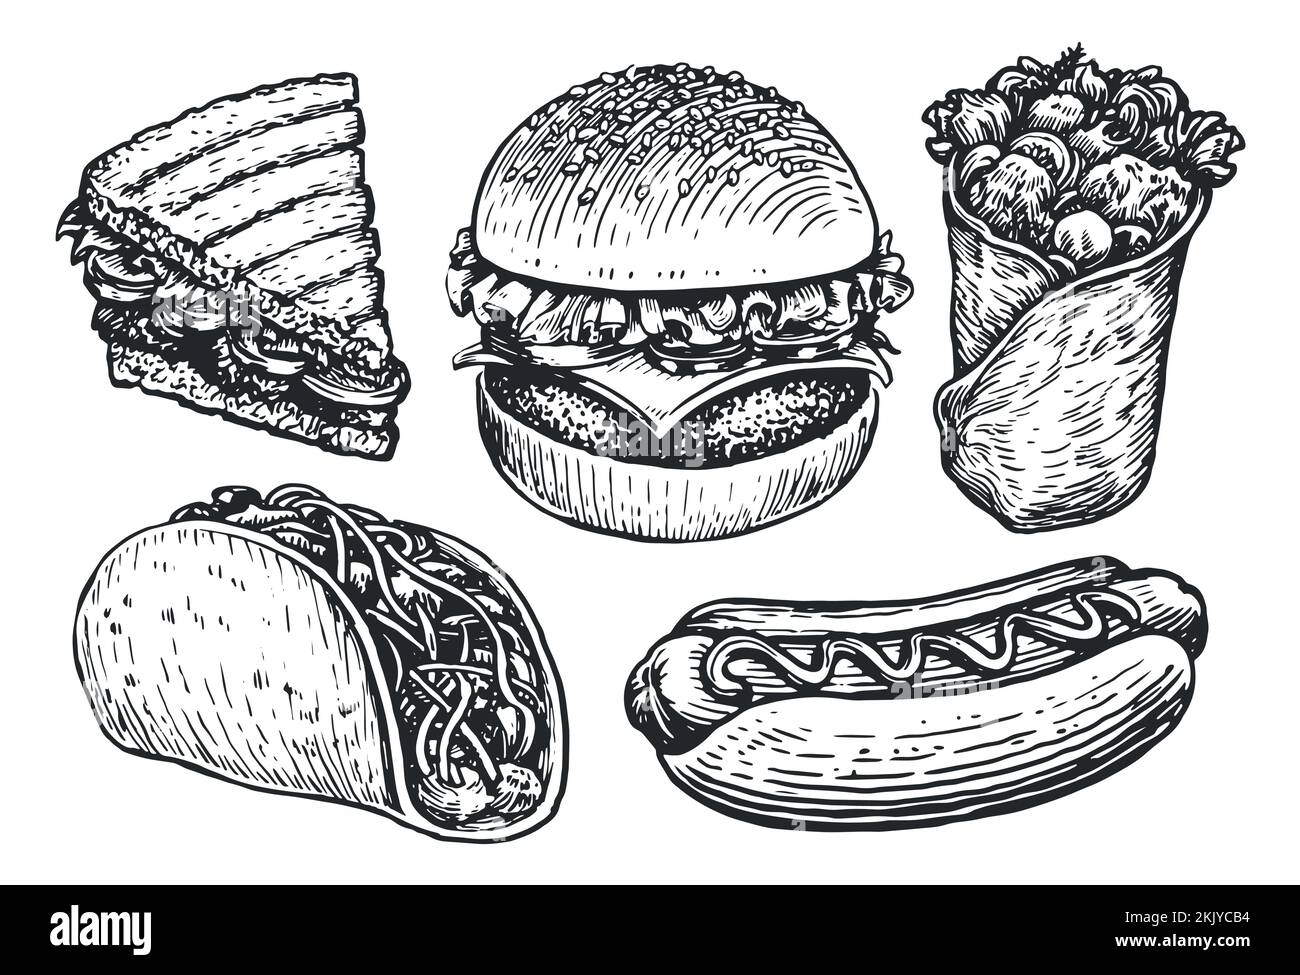 Croquis de la série Fast Food. Hamburger, hot dog, burrito, sandwich, tacos. Illustration de vecteur de concept de nourriture de rue, à emporter Illustration de Vecteur